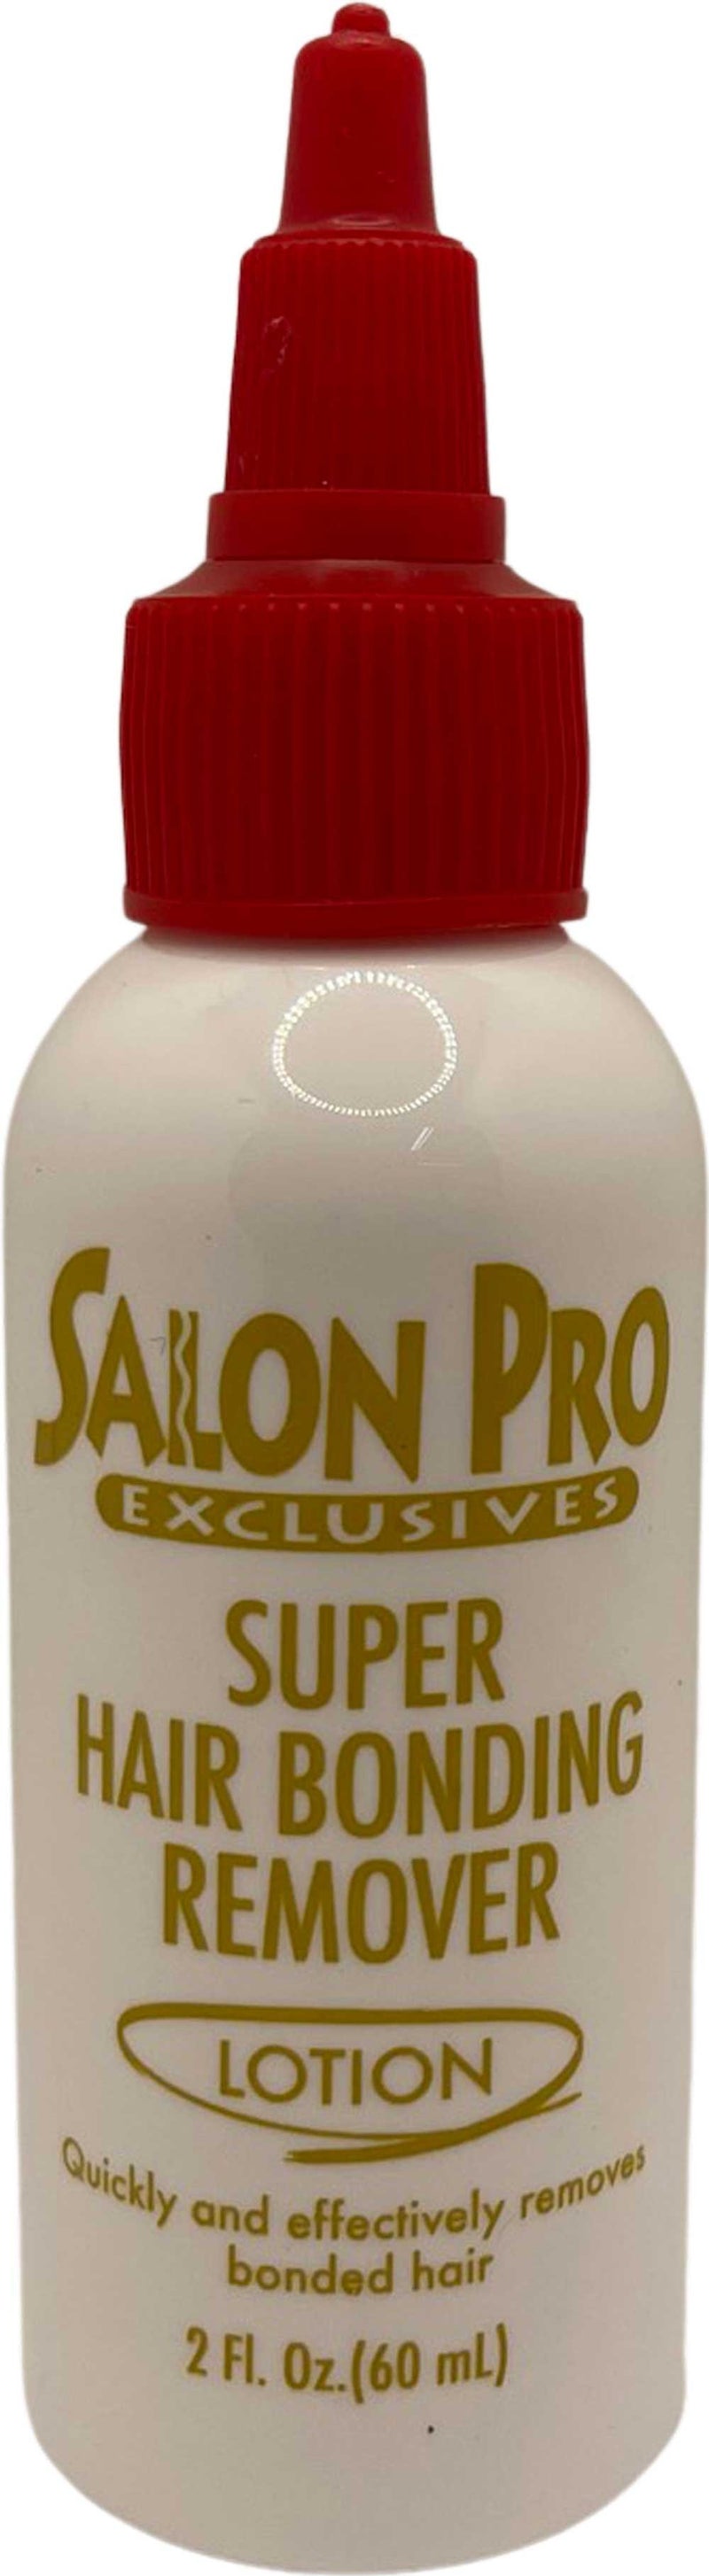 Salon Pro Super Hair Bonding Remover Lotion 2 Oz - Elevate Styles